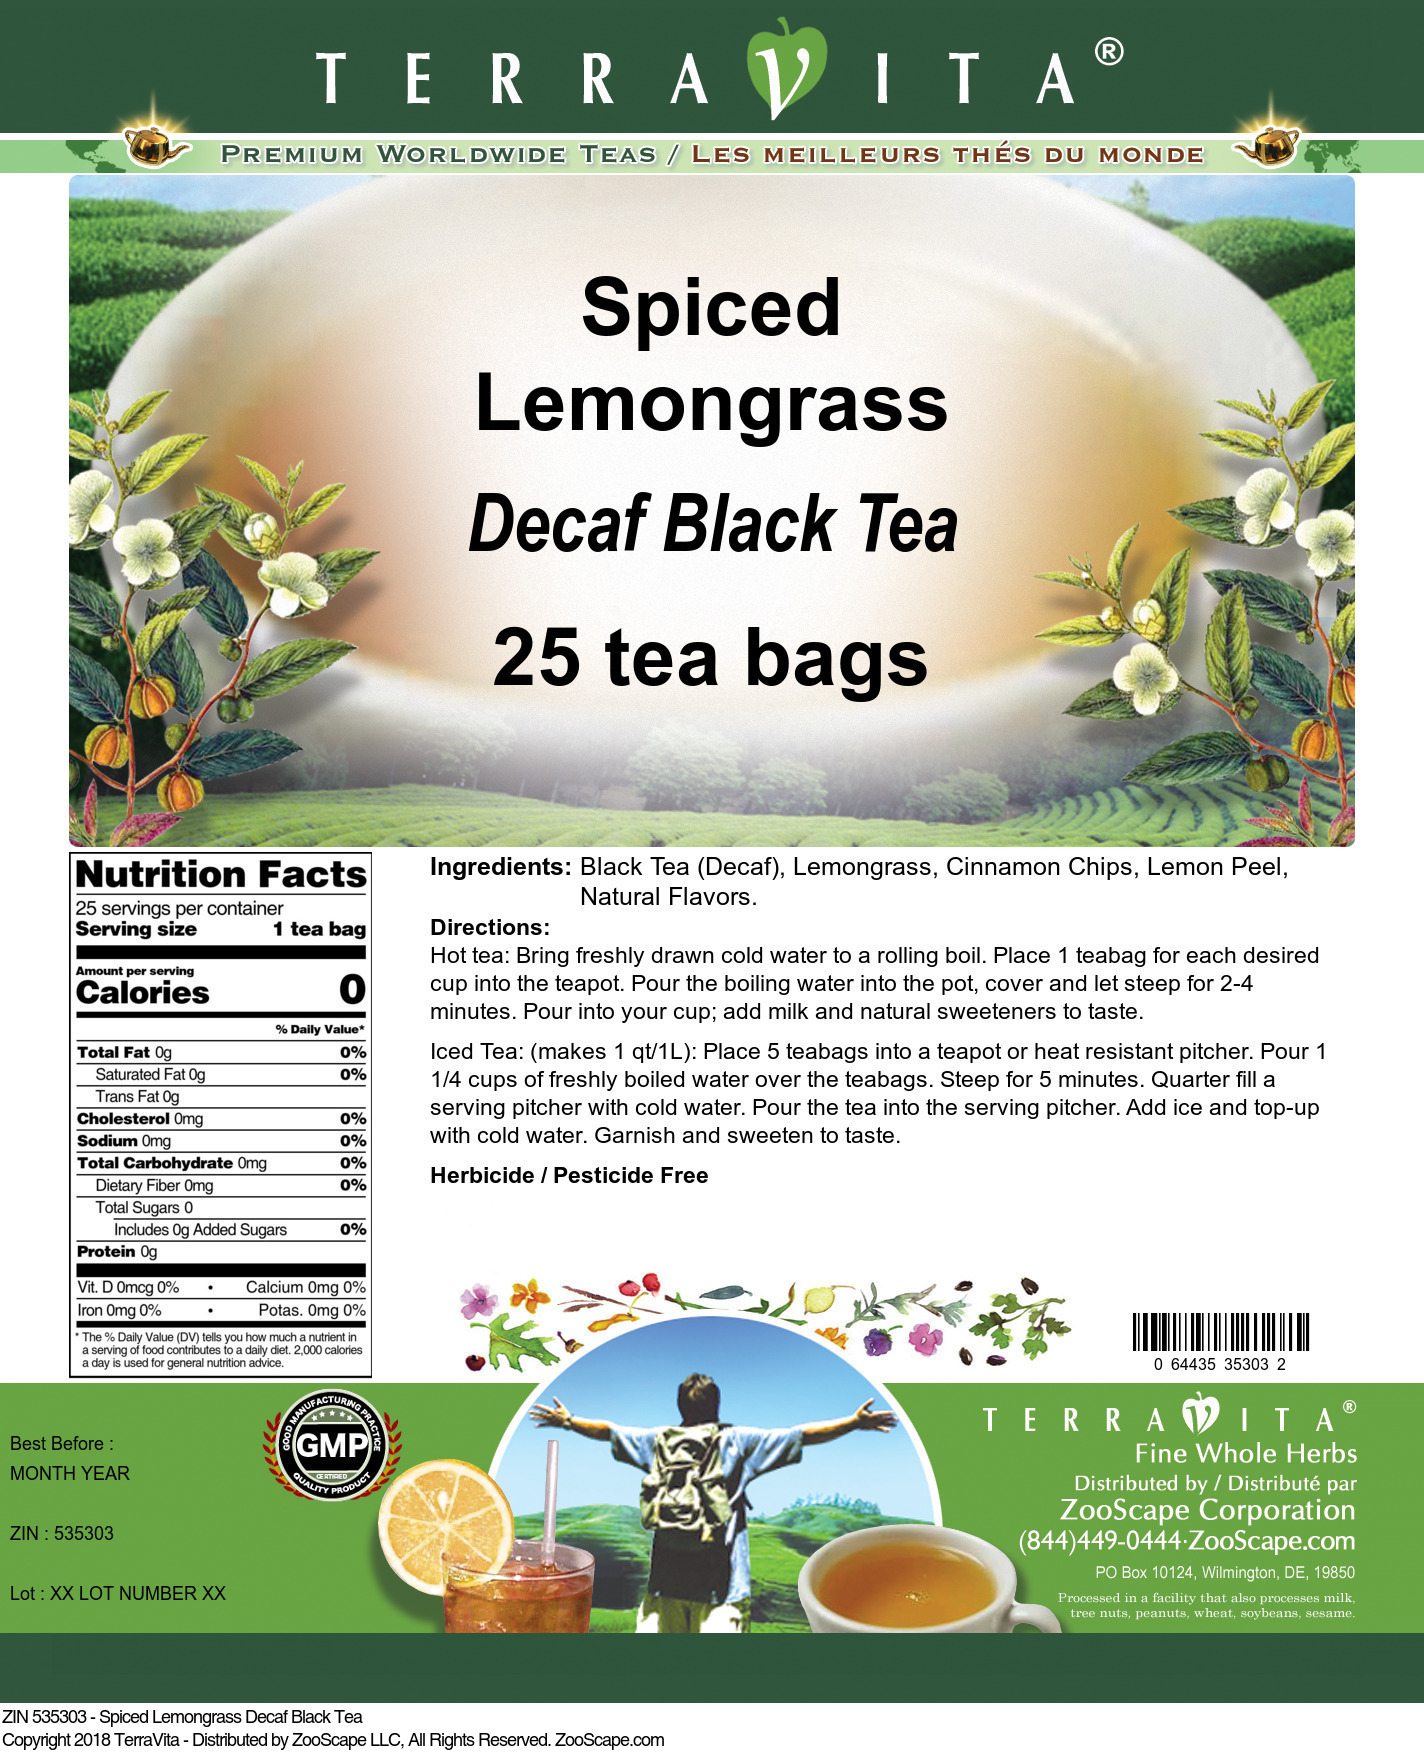 Spiced Lemongrass Decaf Black Tea - Label